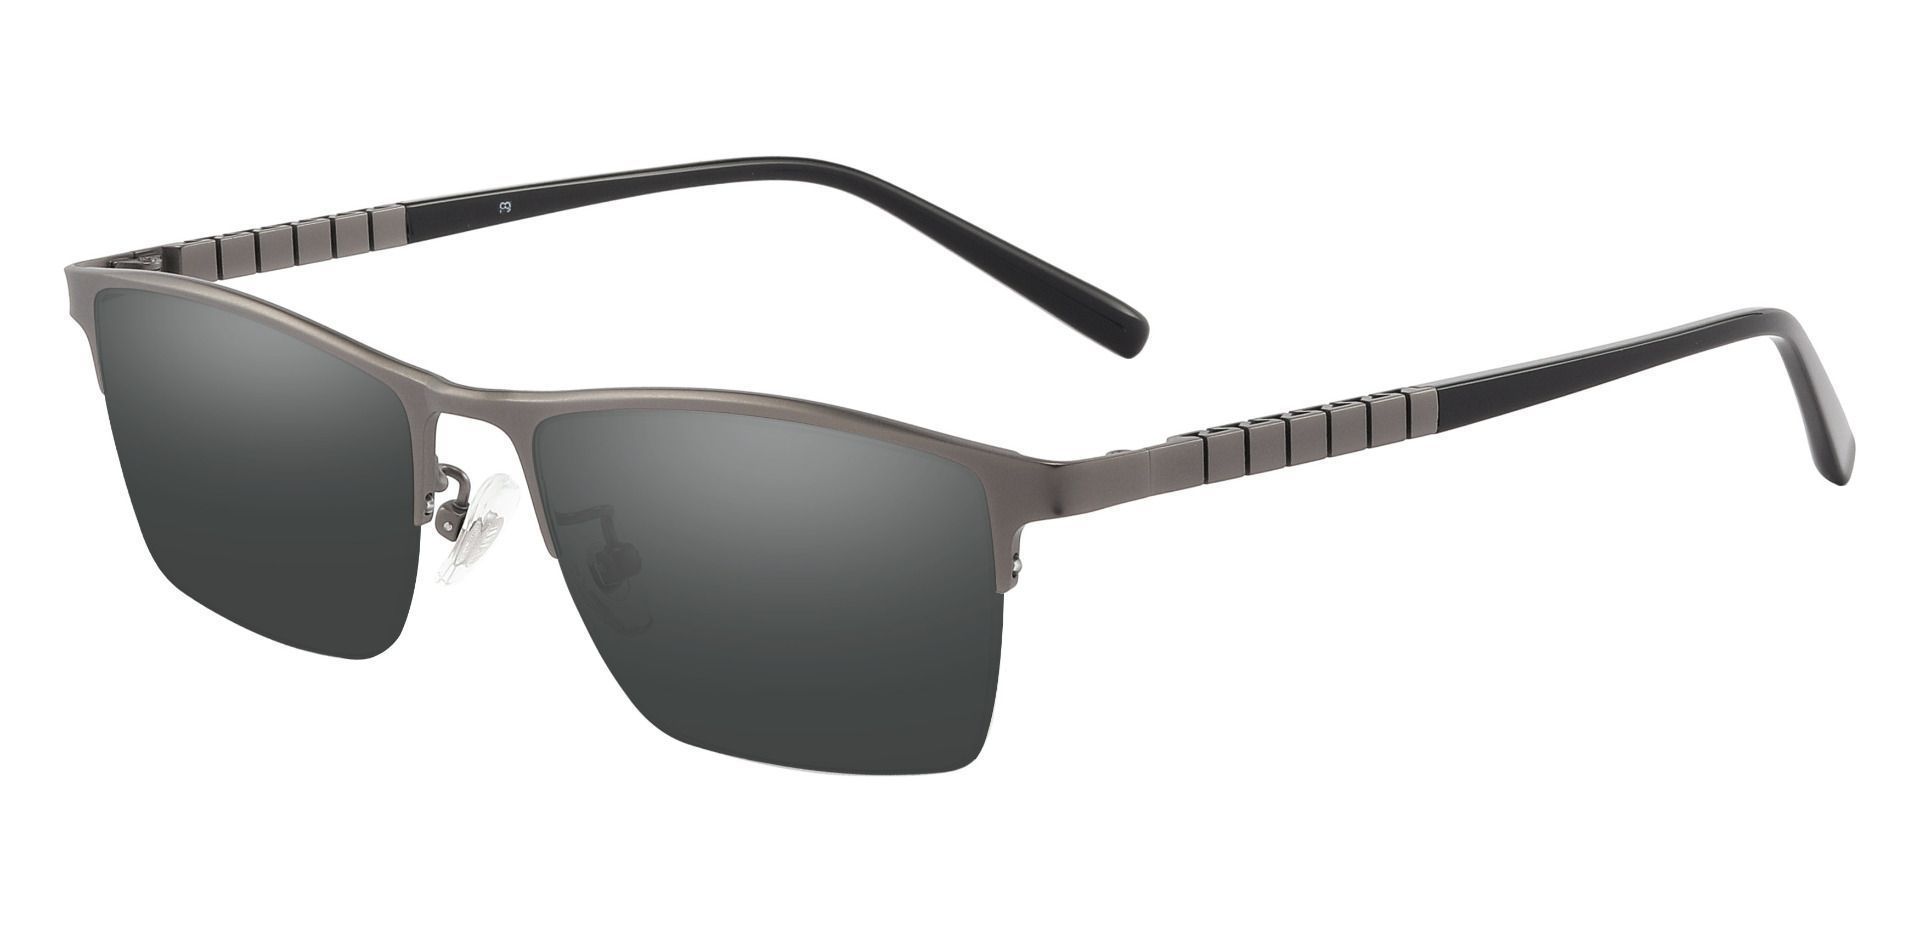 Maine Rectangle Prescription Sunglasses - Gray Frame With Gray Lenses